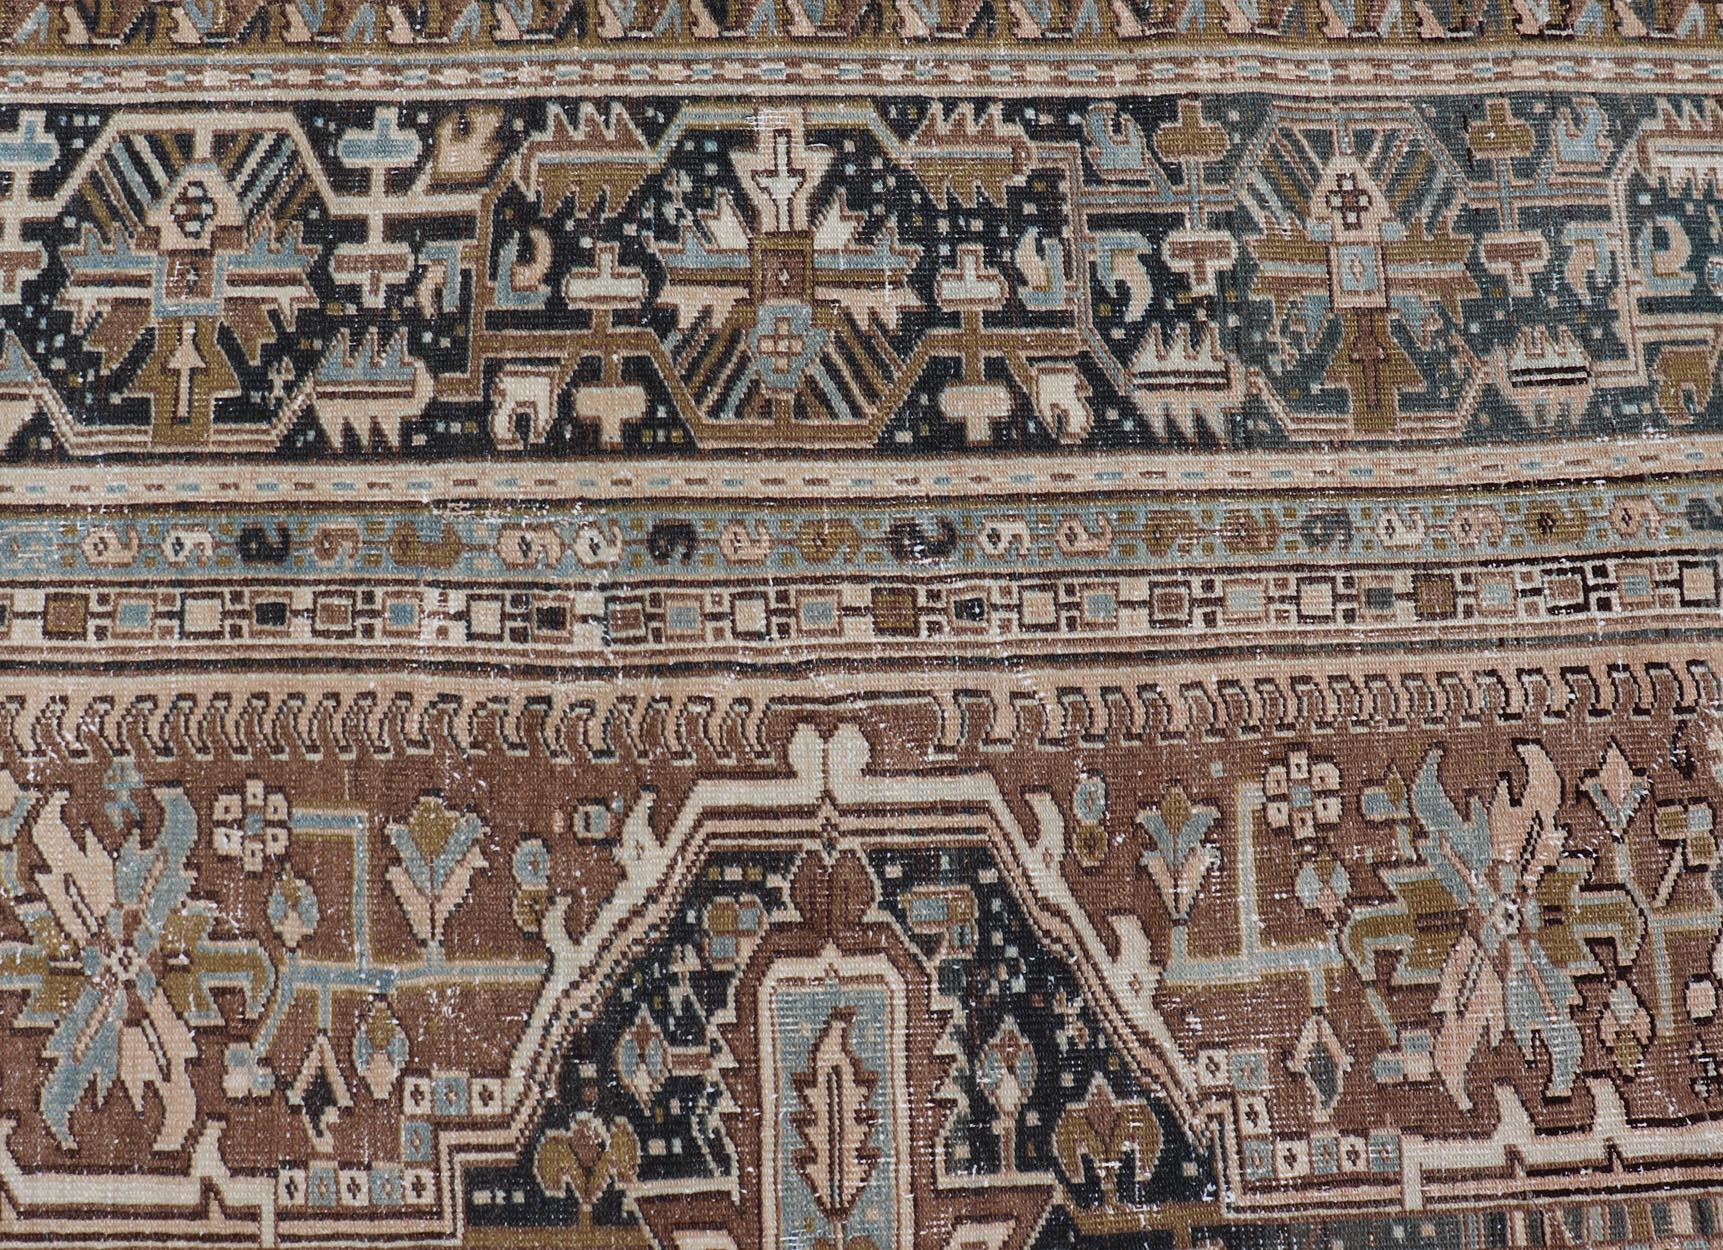 Persian Antique Heriz Rug with Geometric Design in Blue's, Tan, Cream, and Brown. Keivan Woven Arts / rug V21-0120, country of origin / type: Iran / Heriz, circa 1930
Measures: 11'5 x 14'7
This magnificent Persian Heriz carpet bears an exquisite